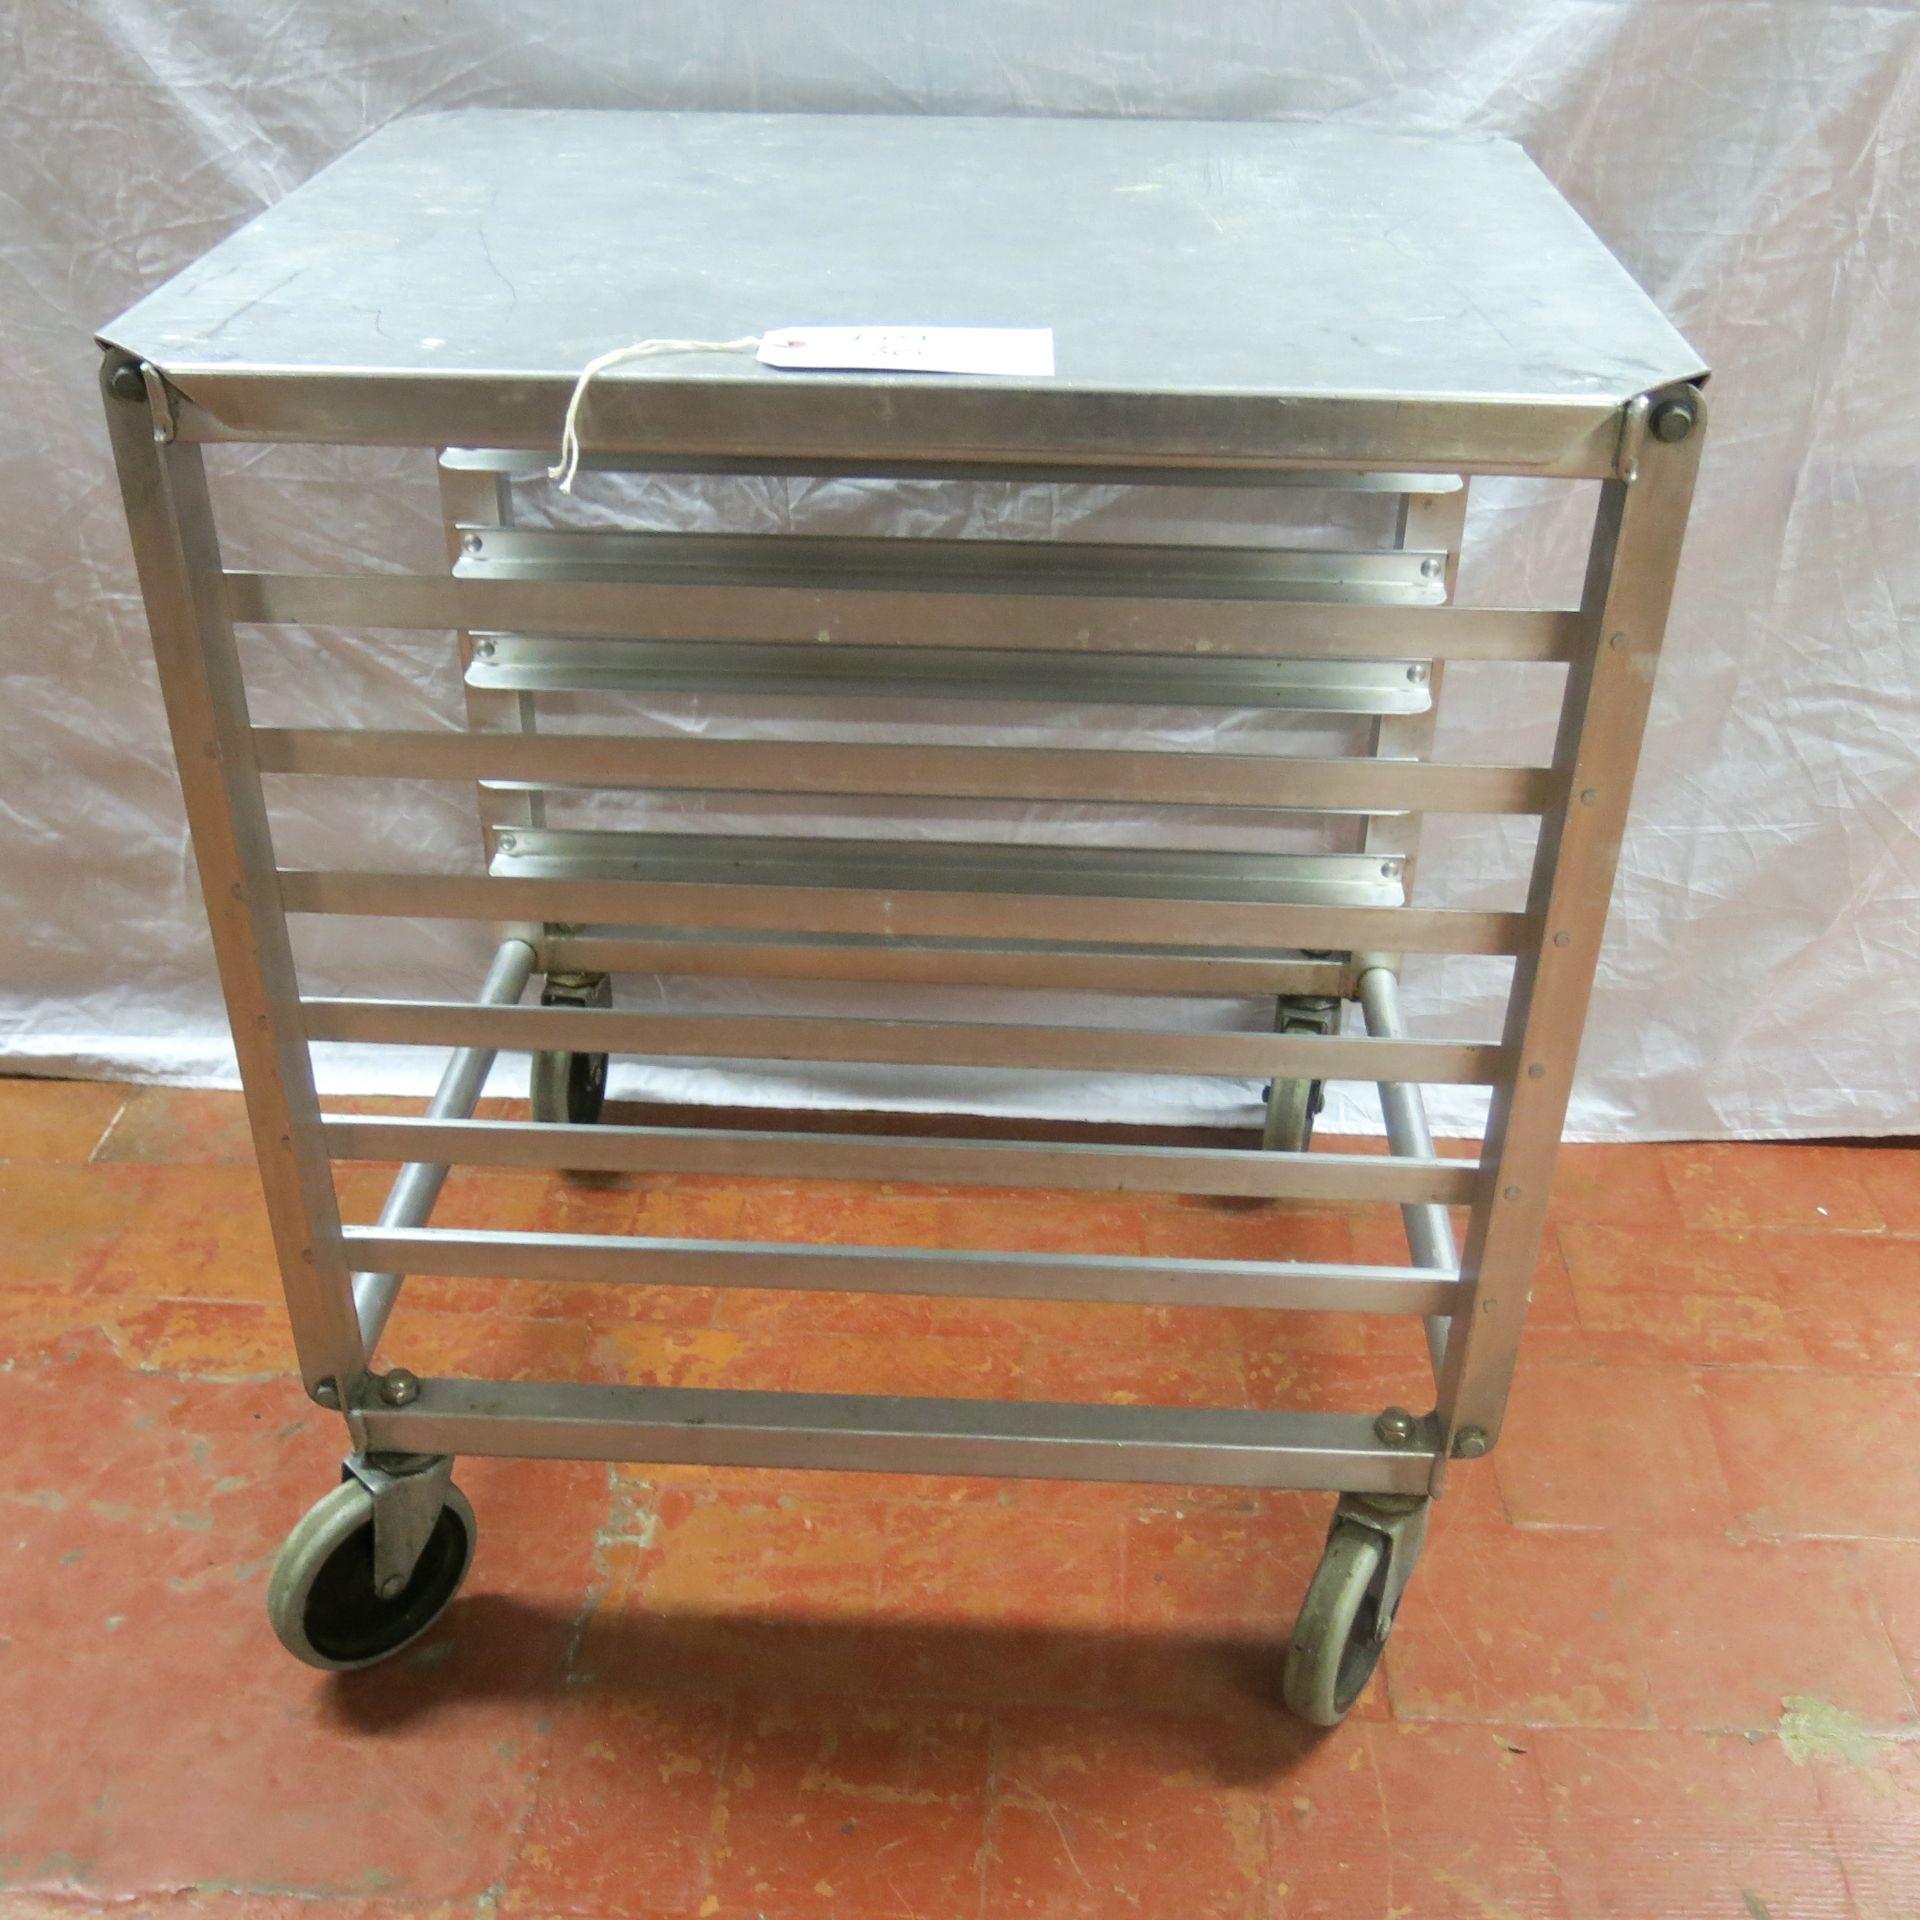 Lockwood 6 Shelf Aluminium Mobile Rack. Size H75cm x W68cm x D54cm